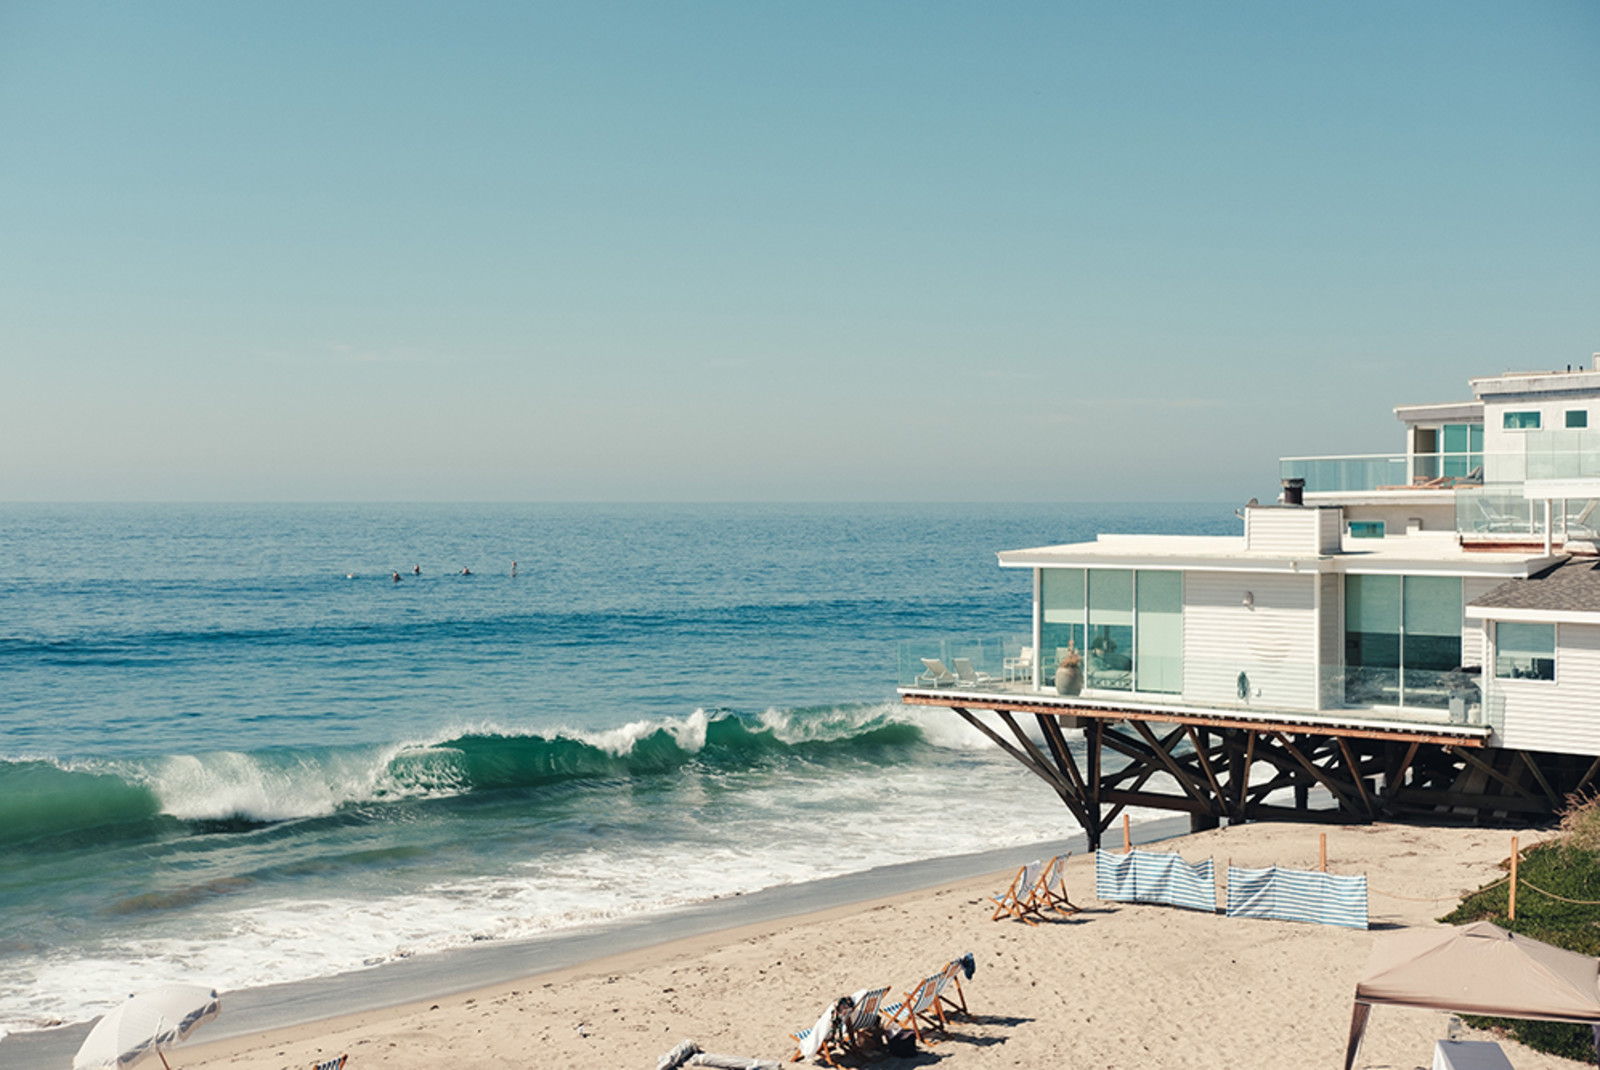 Malibu California beach blue water waves white house and beach chairs